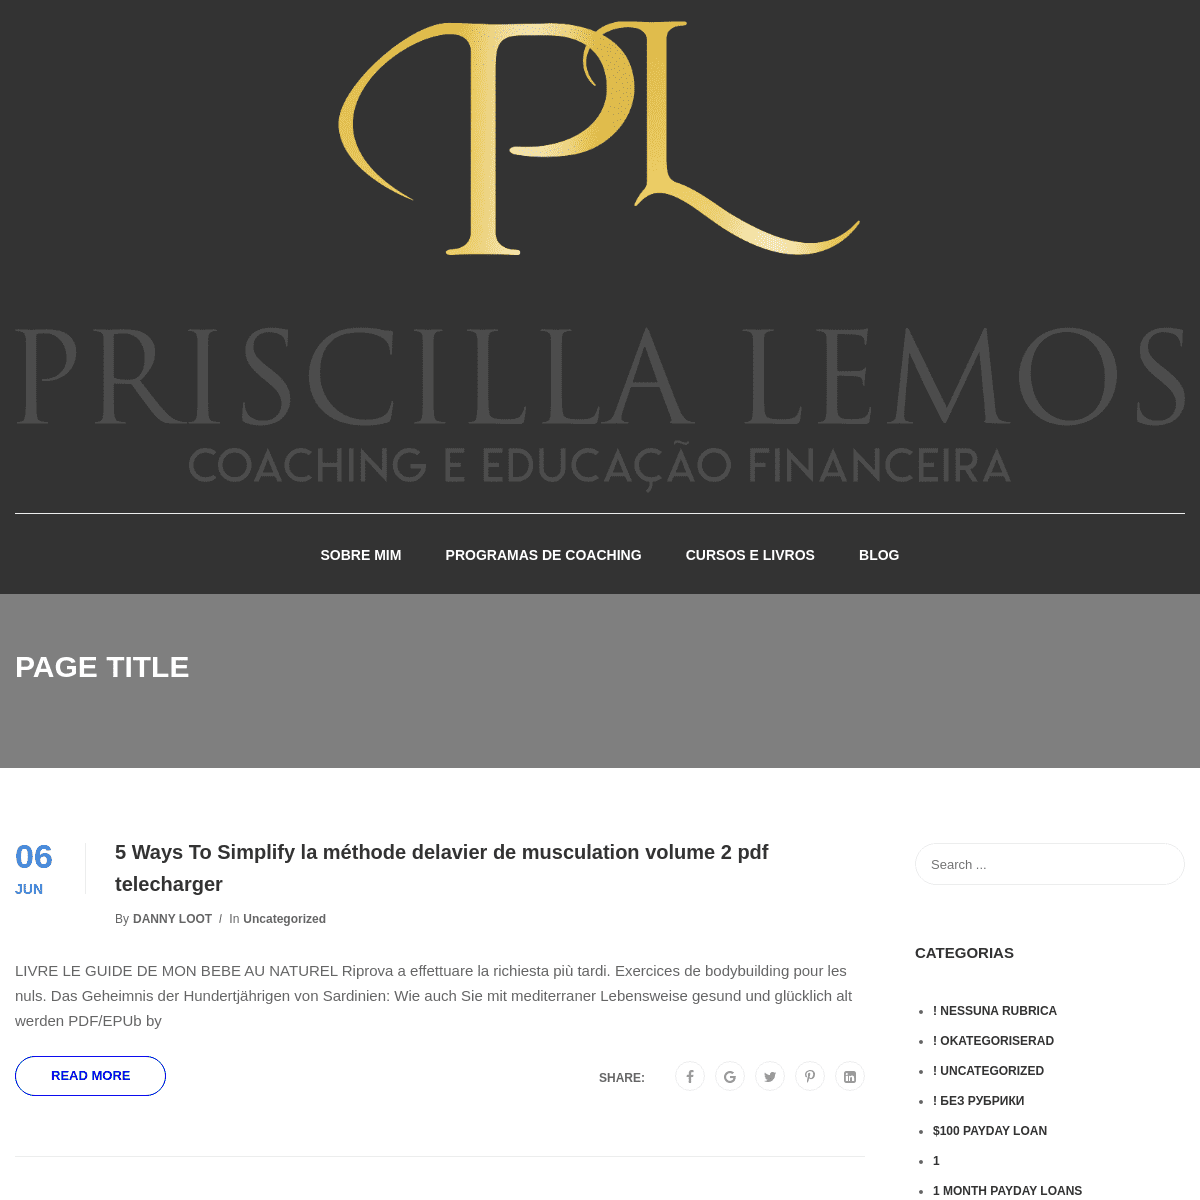 A complete backup of https://priscillalemoscoach.com.br